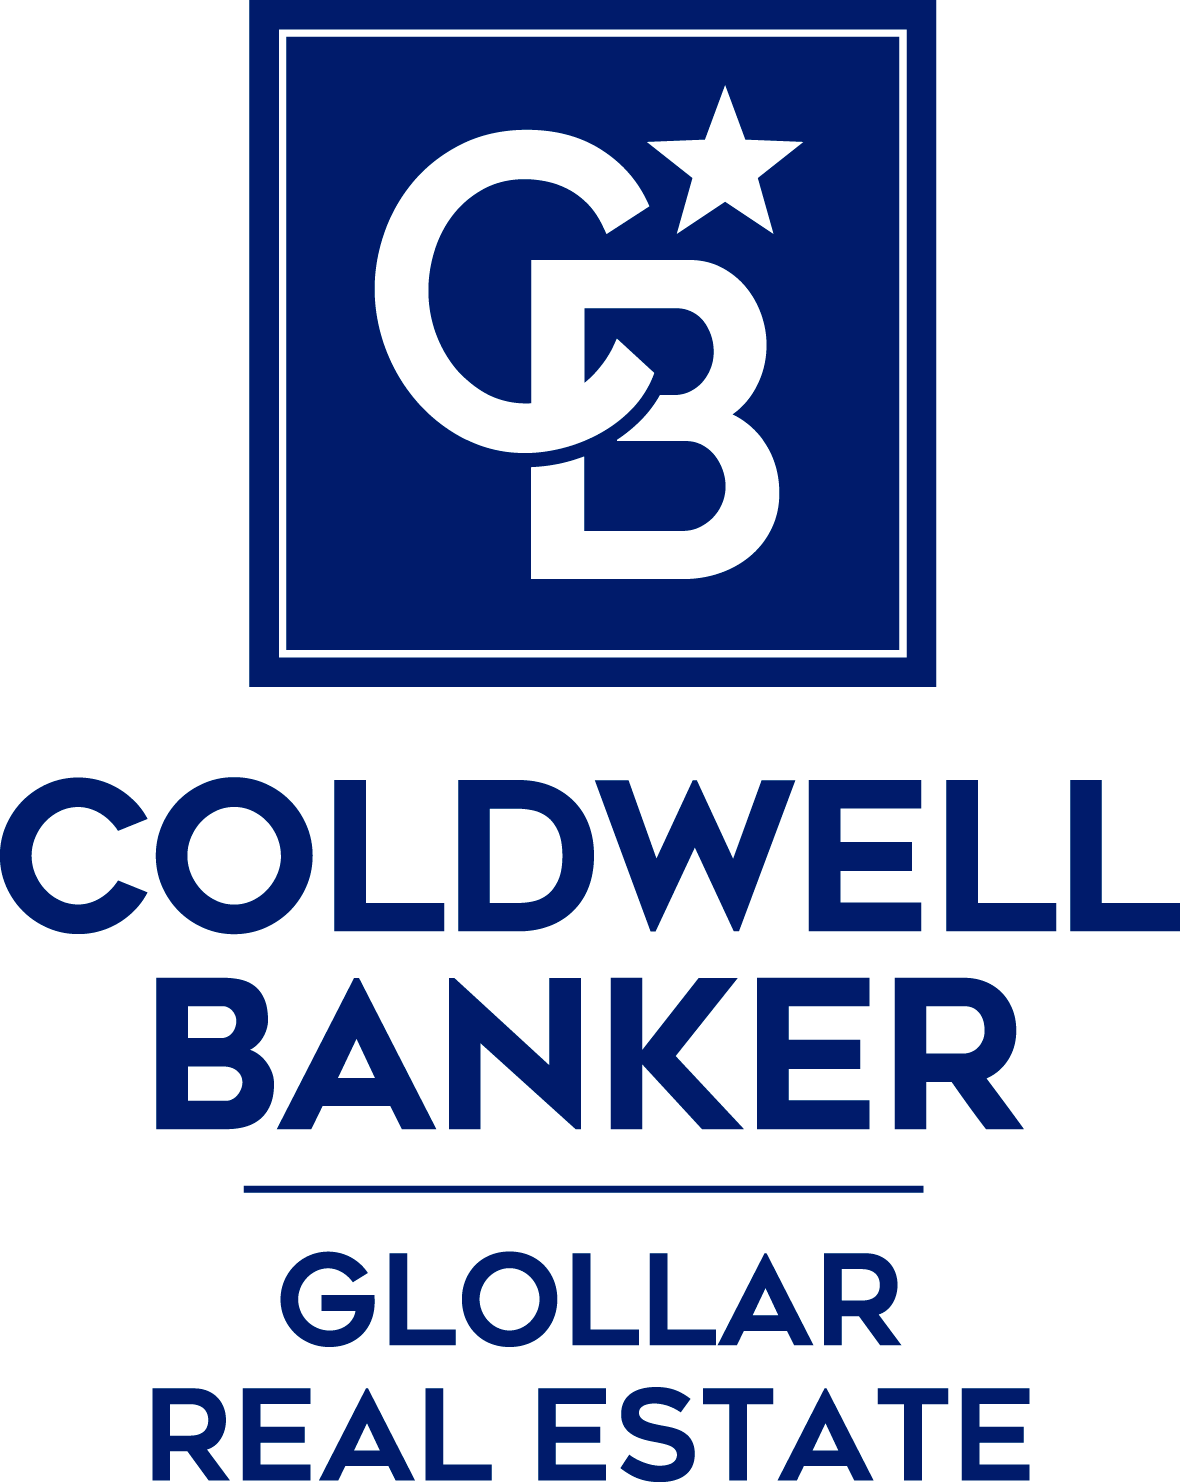 Coldwell Banker Glollar Real Estate